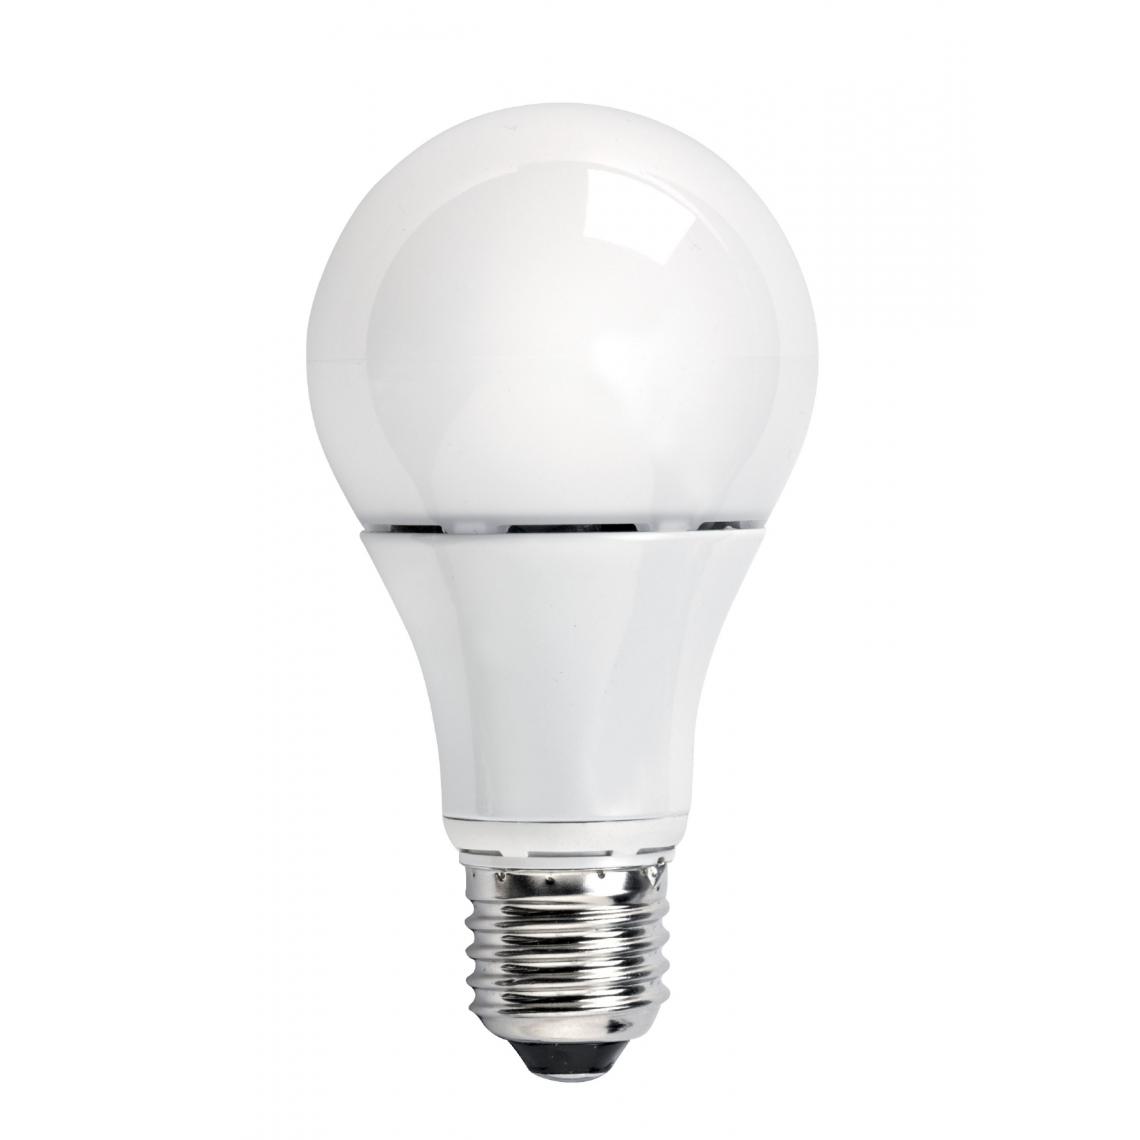 Aric - lampe à led - aric led standard - culot e27 - 9w - 2700k - aric 2956 - Ampoules LED